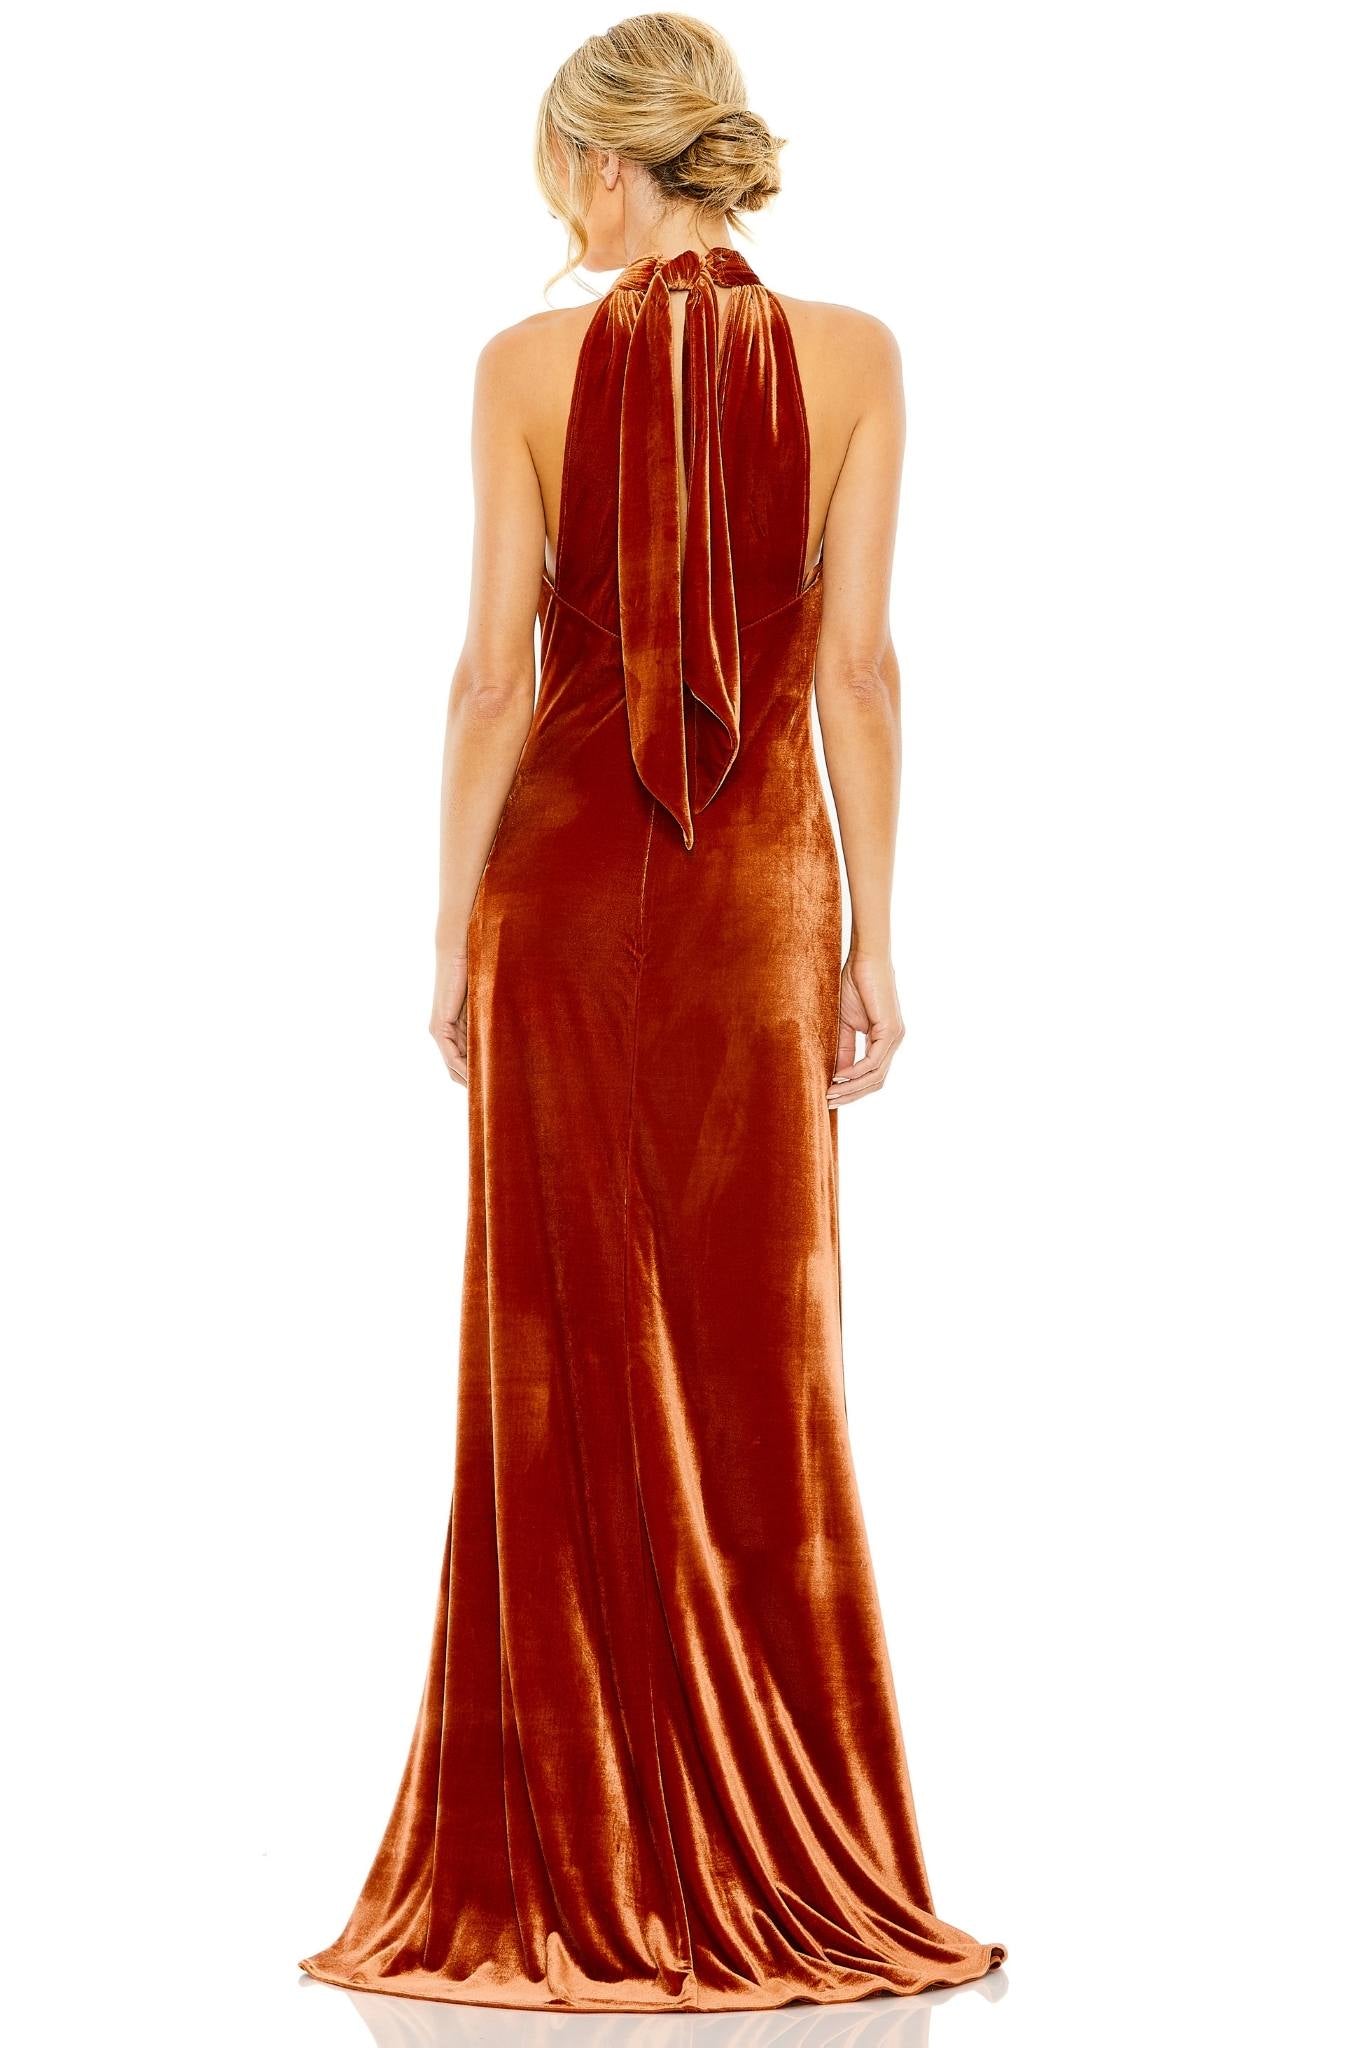 Pasha Halter Gown in Burnt Orange by Mac Duggal - RENTAL